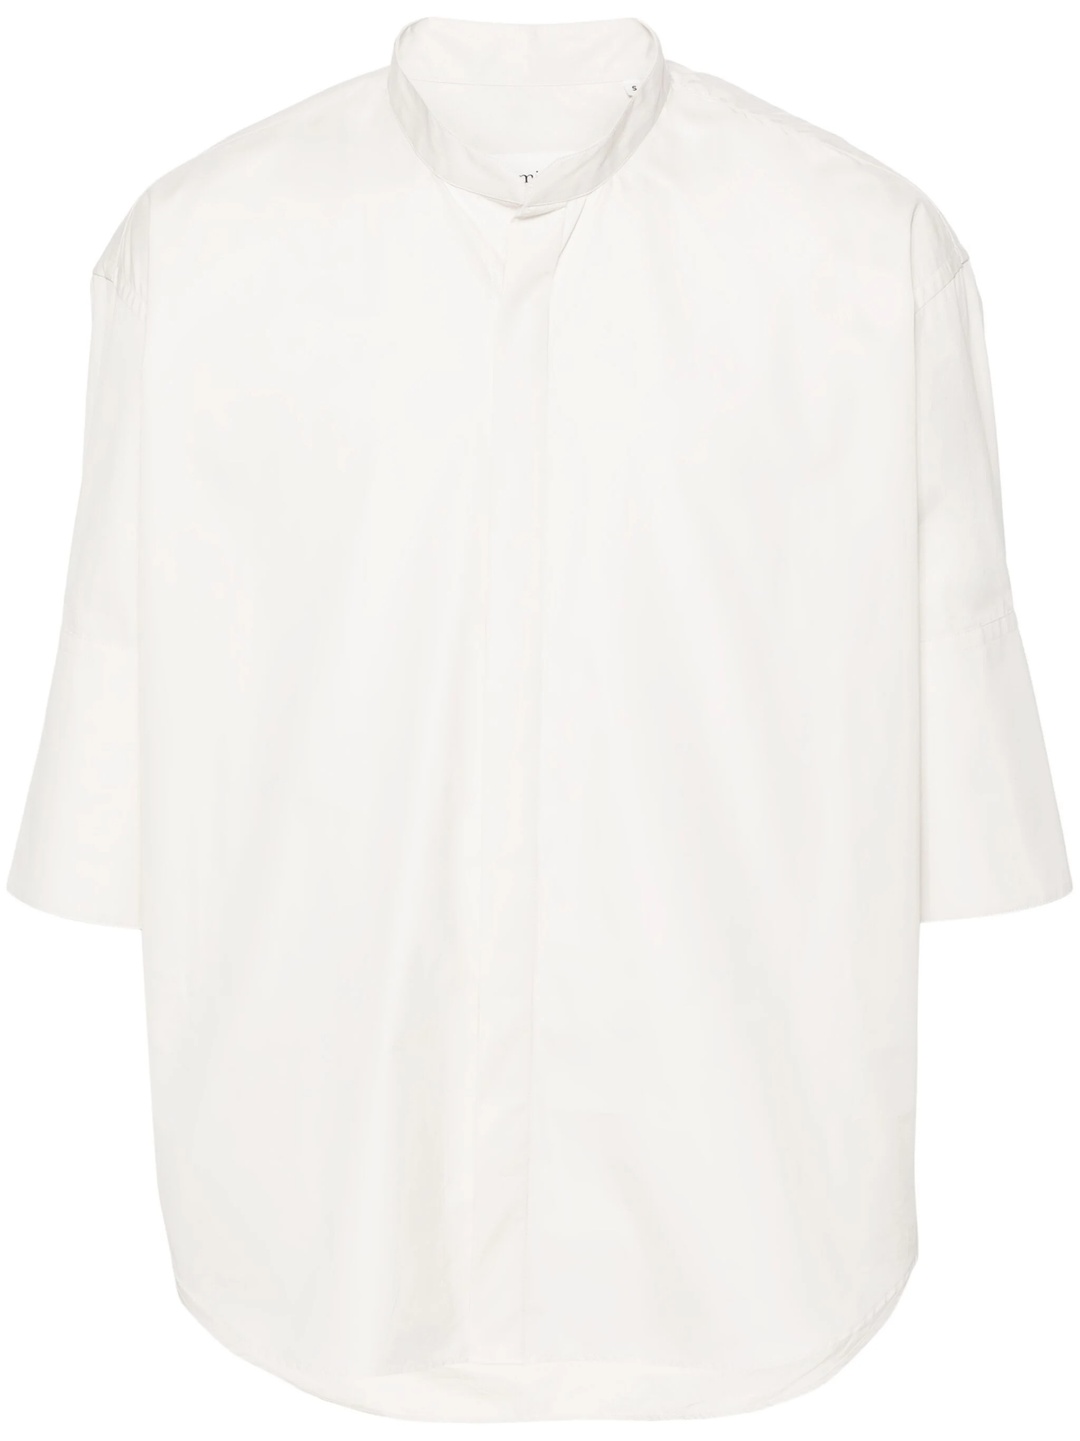 Mandarin Collar Shirt - 1